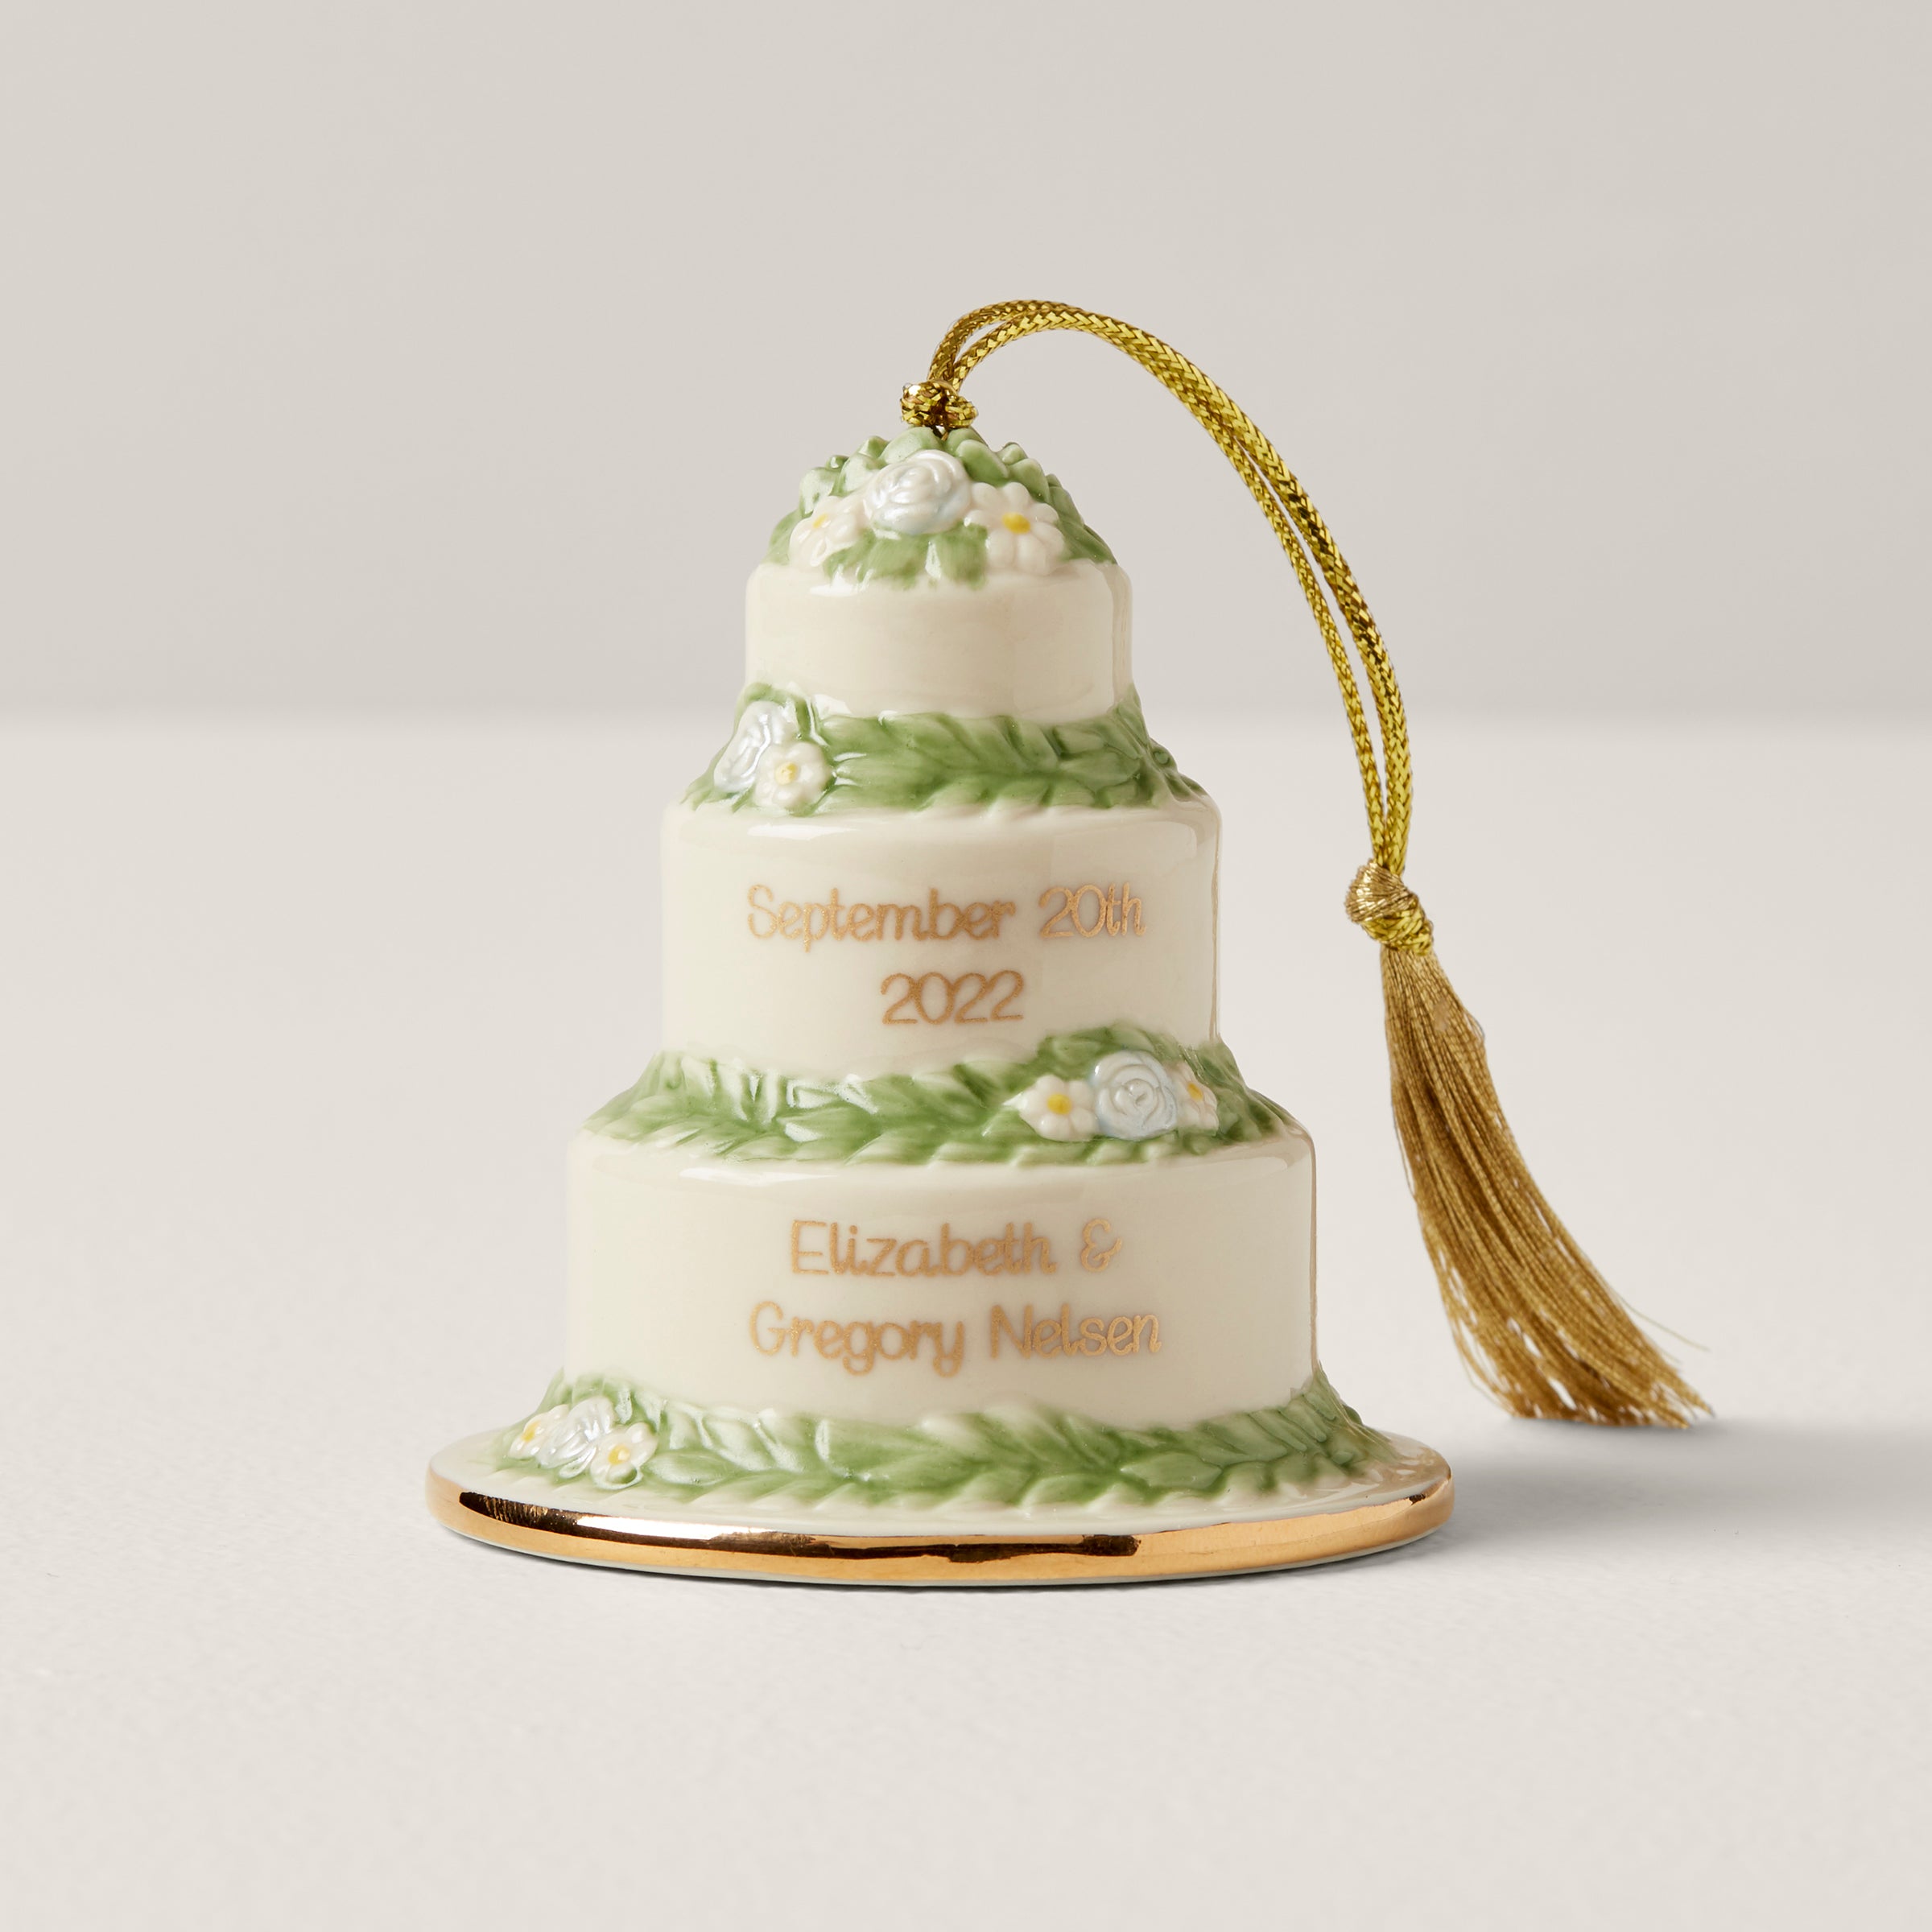 Lenox Wedding Promises First Dance Cake Topper for Sale in Hemet, CA -  OfferUp